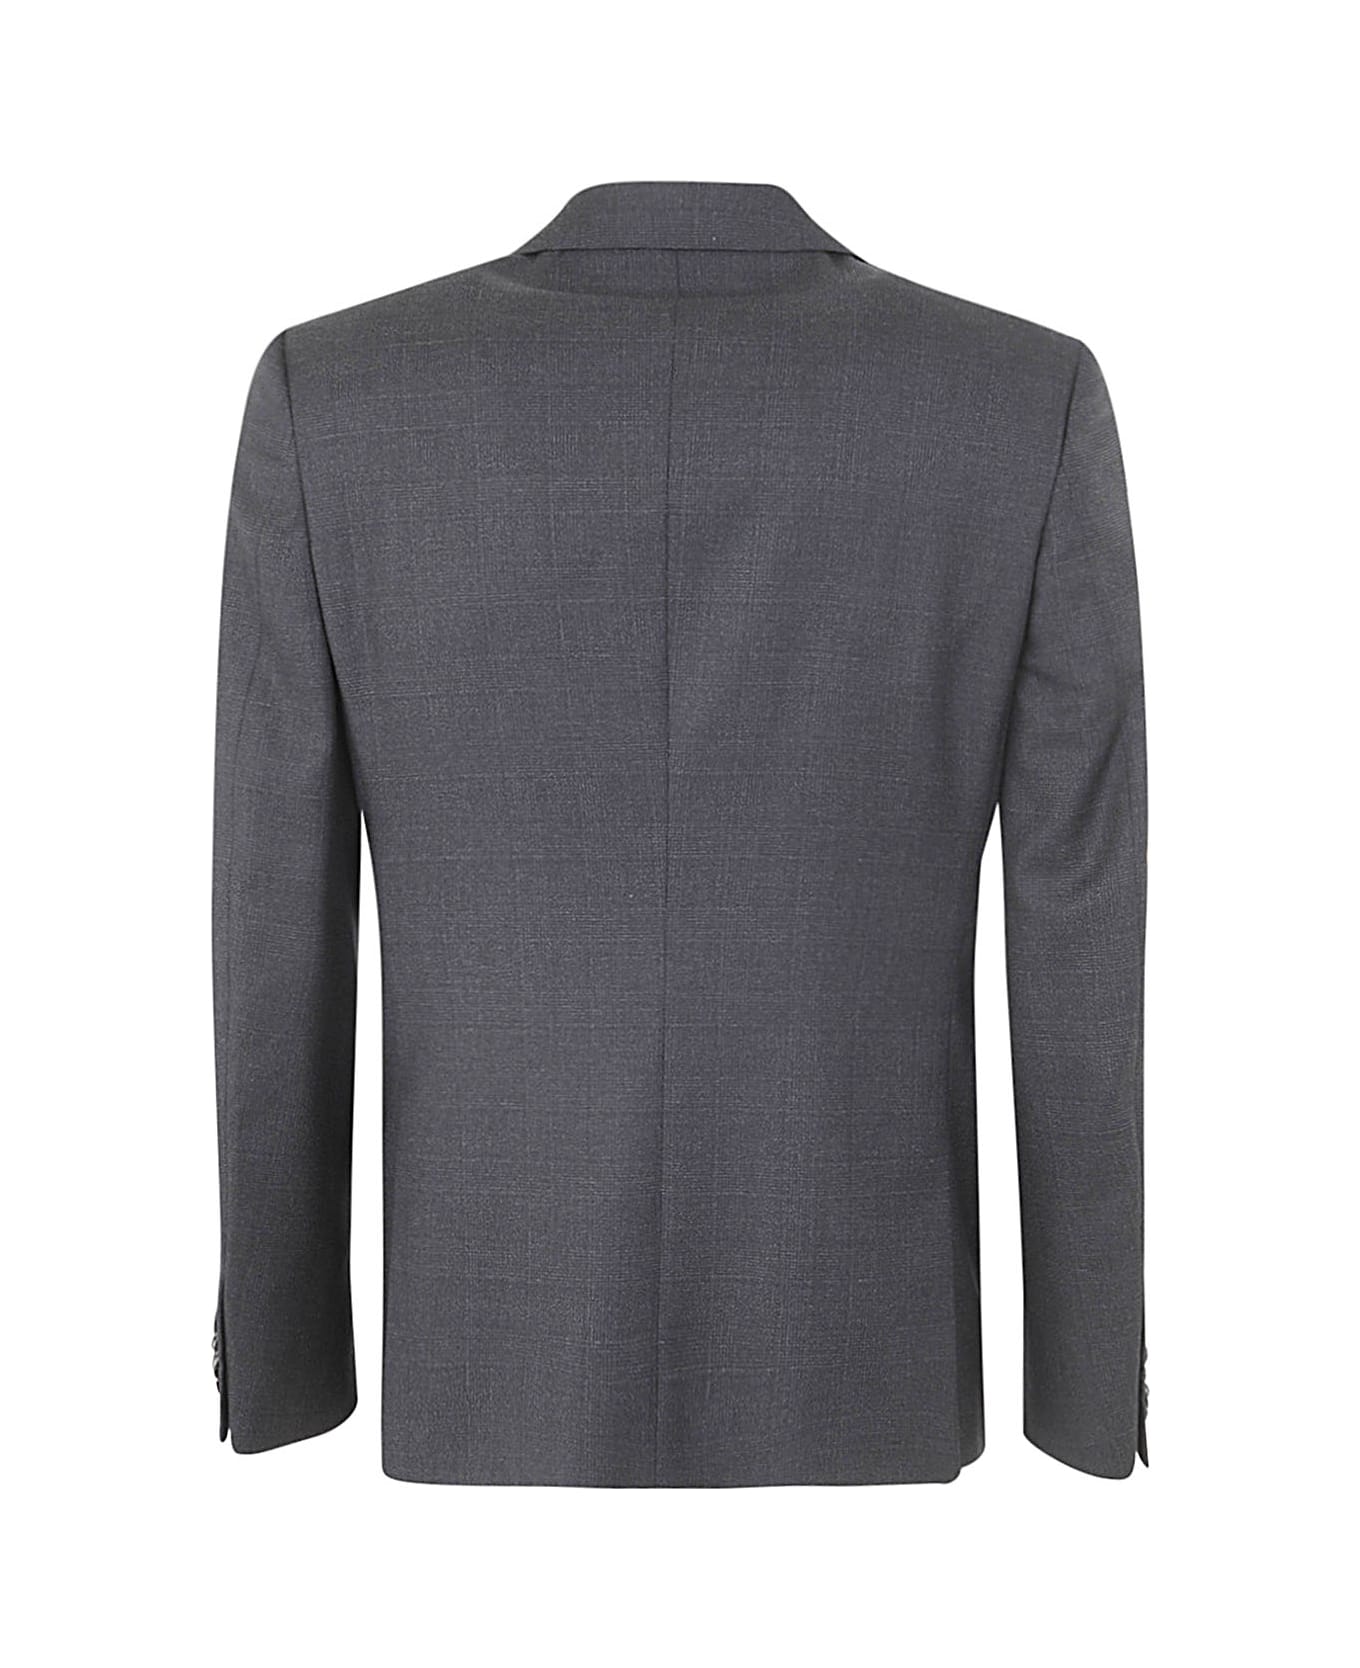 Zegna Pure Wool Suit - Grey スーツ